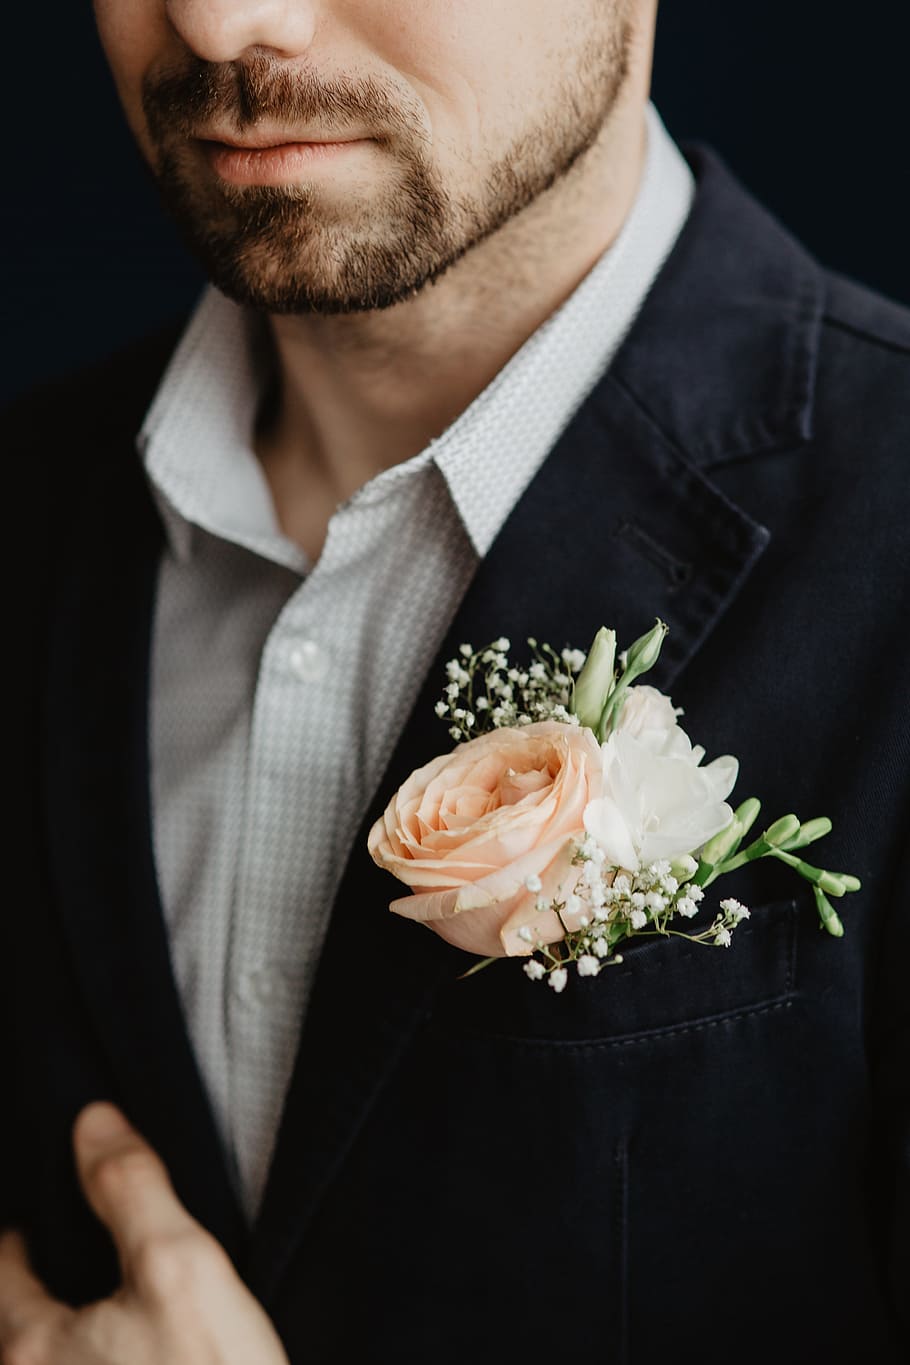 wedding flowers, flowers, wedding, bouquet, bouqet, flower, one person, flowering plant, well-dressed, men